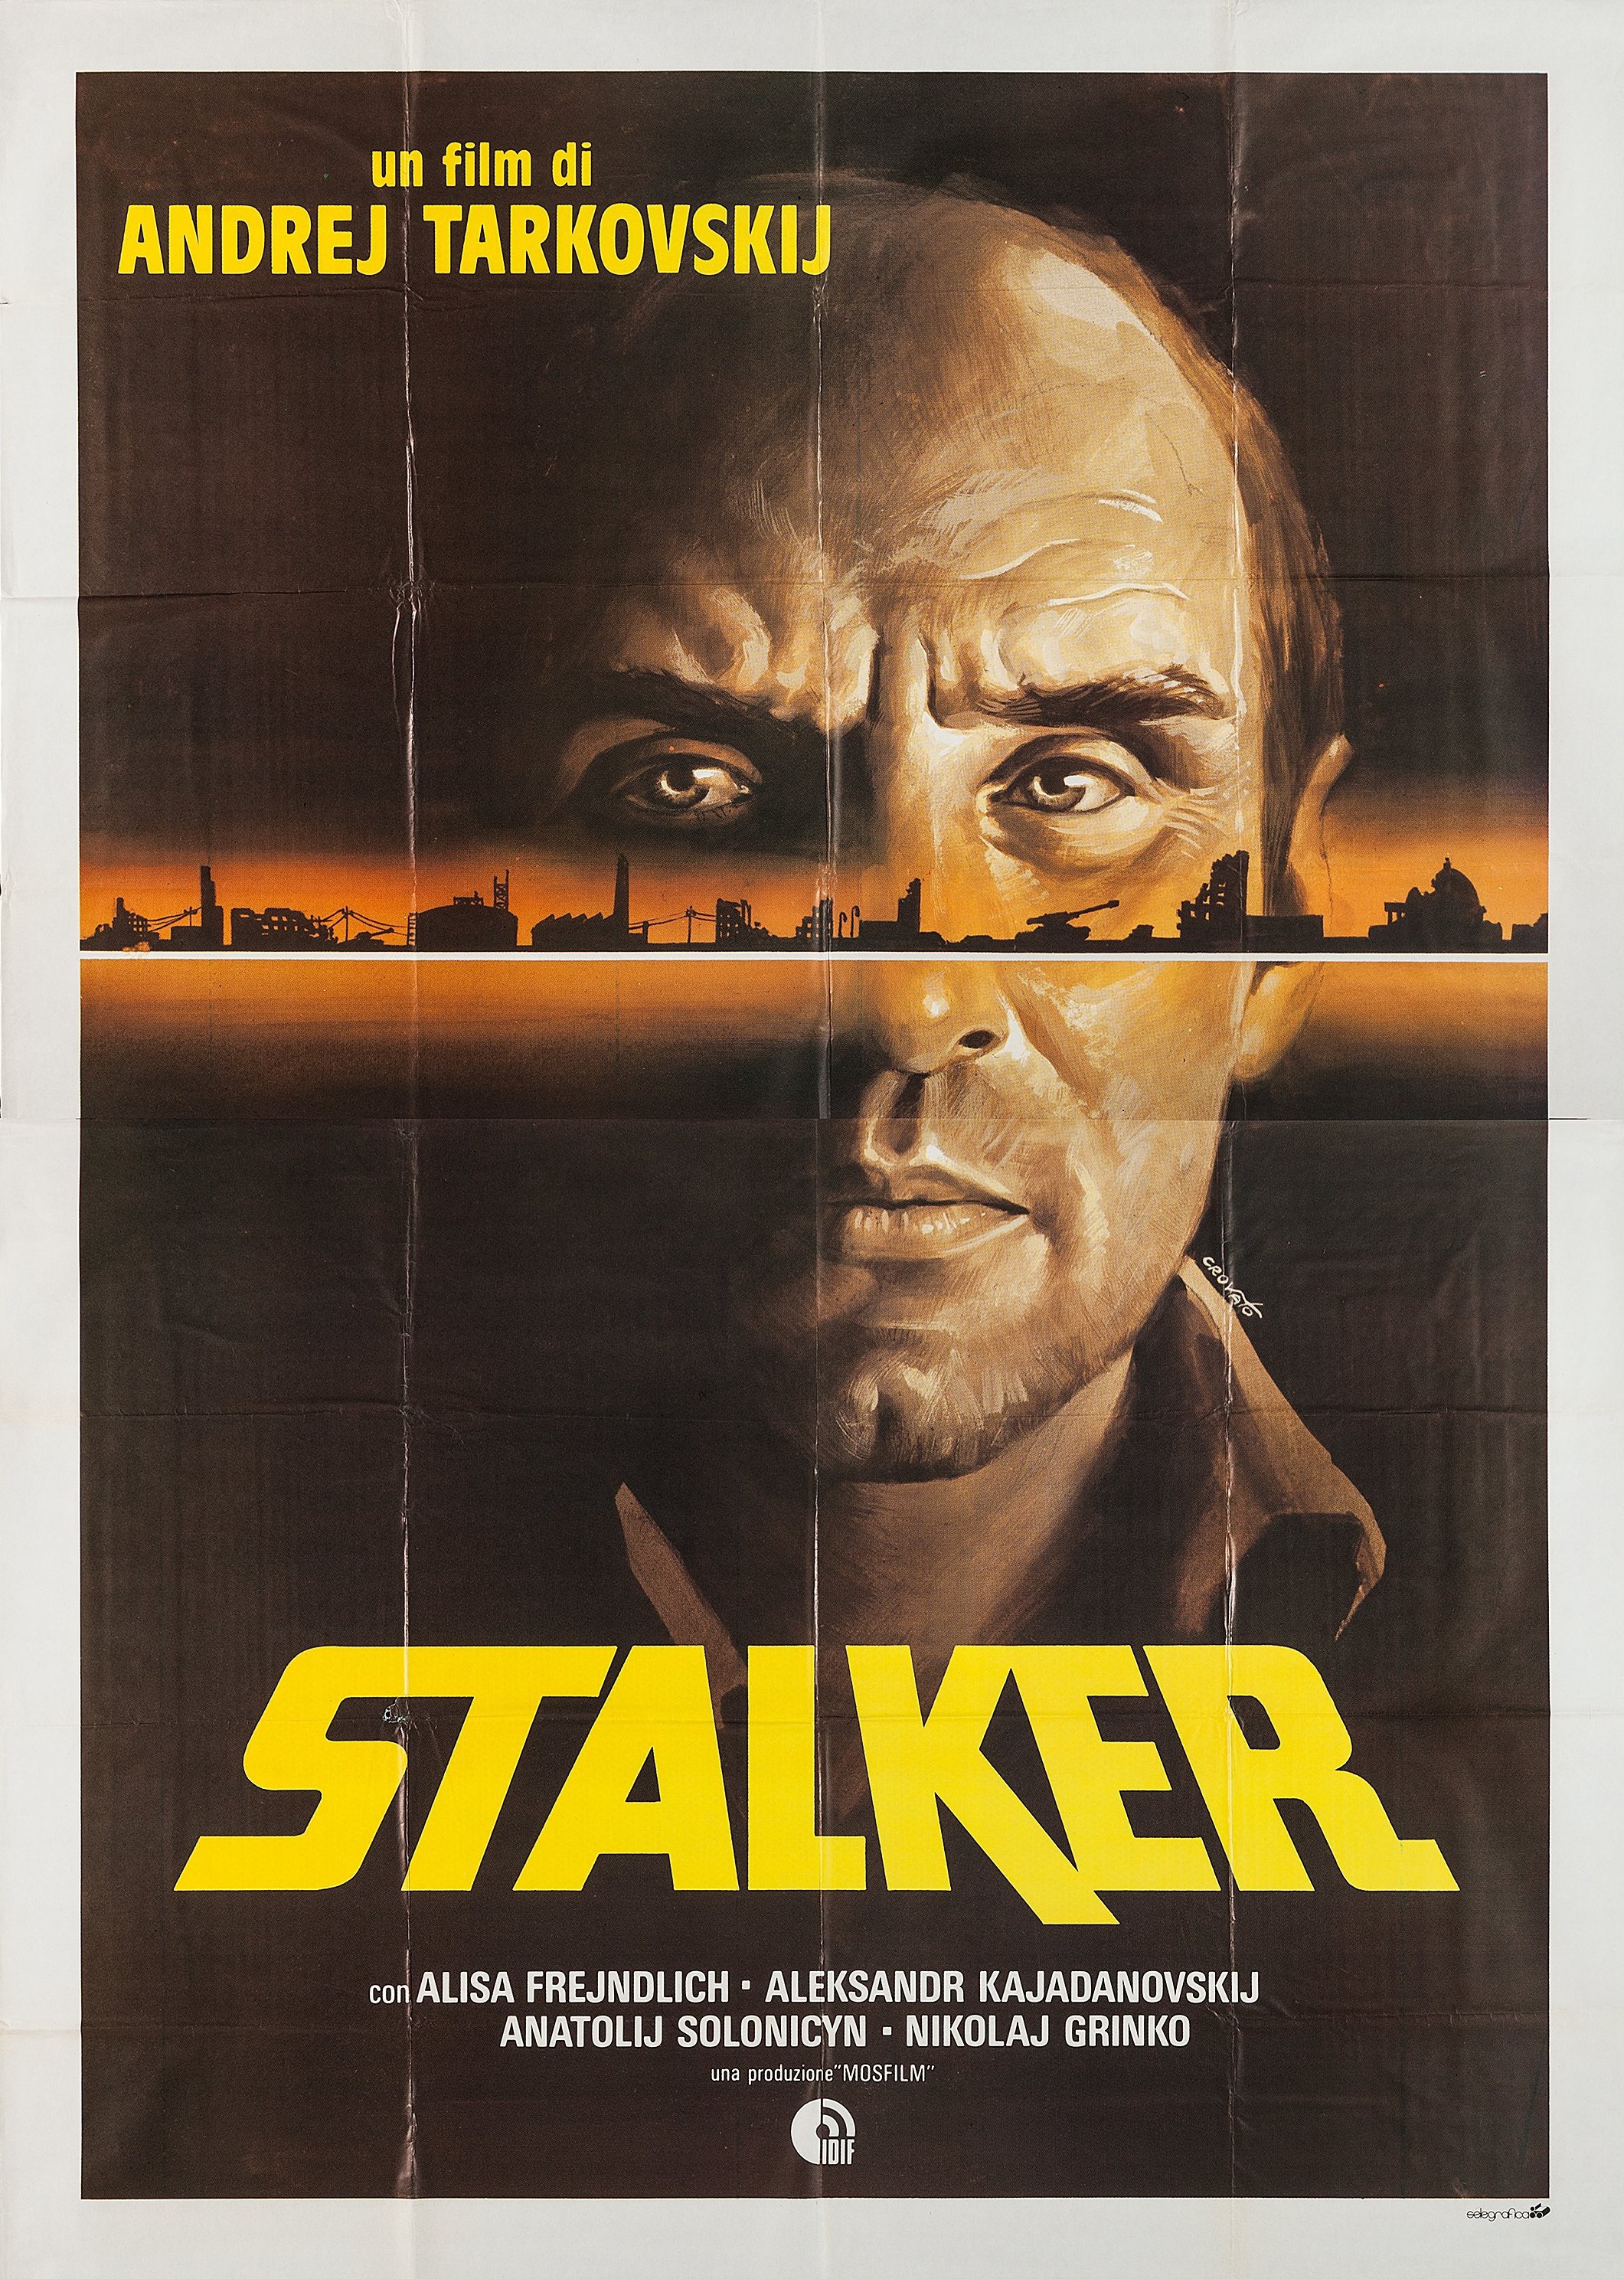 Mega Sized Movie Poster Image for Stalker (#1 of 7)